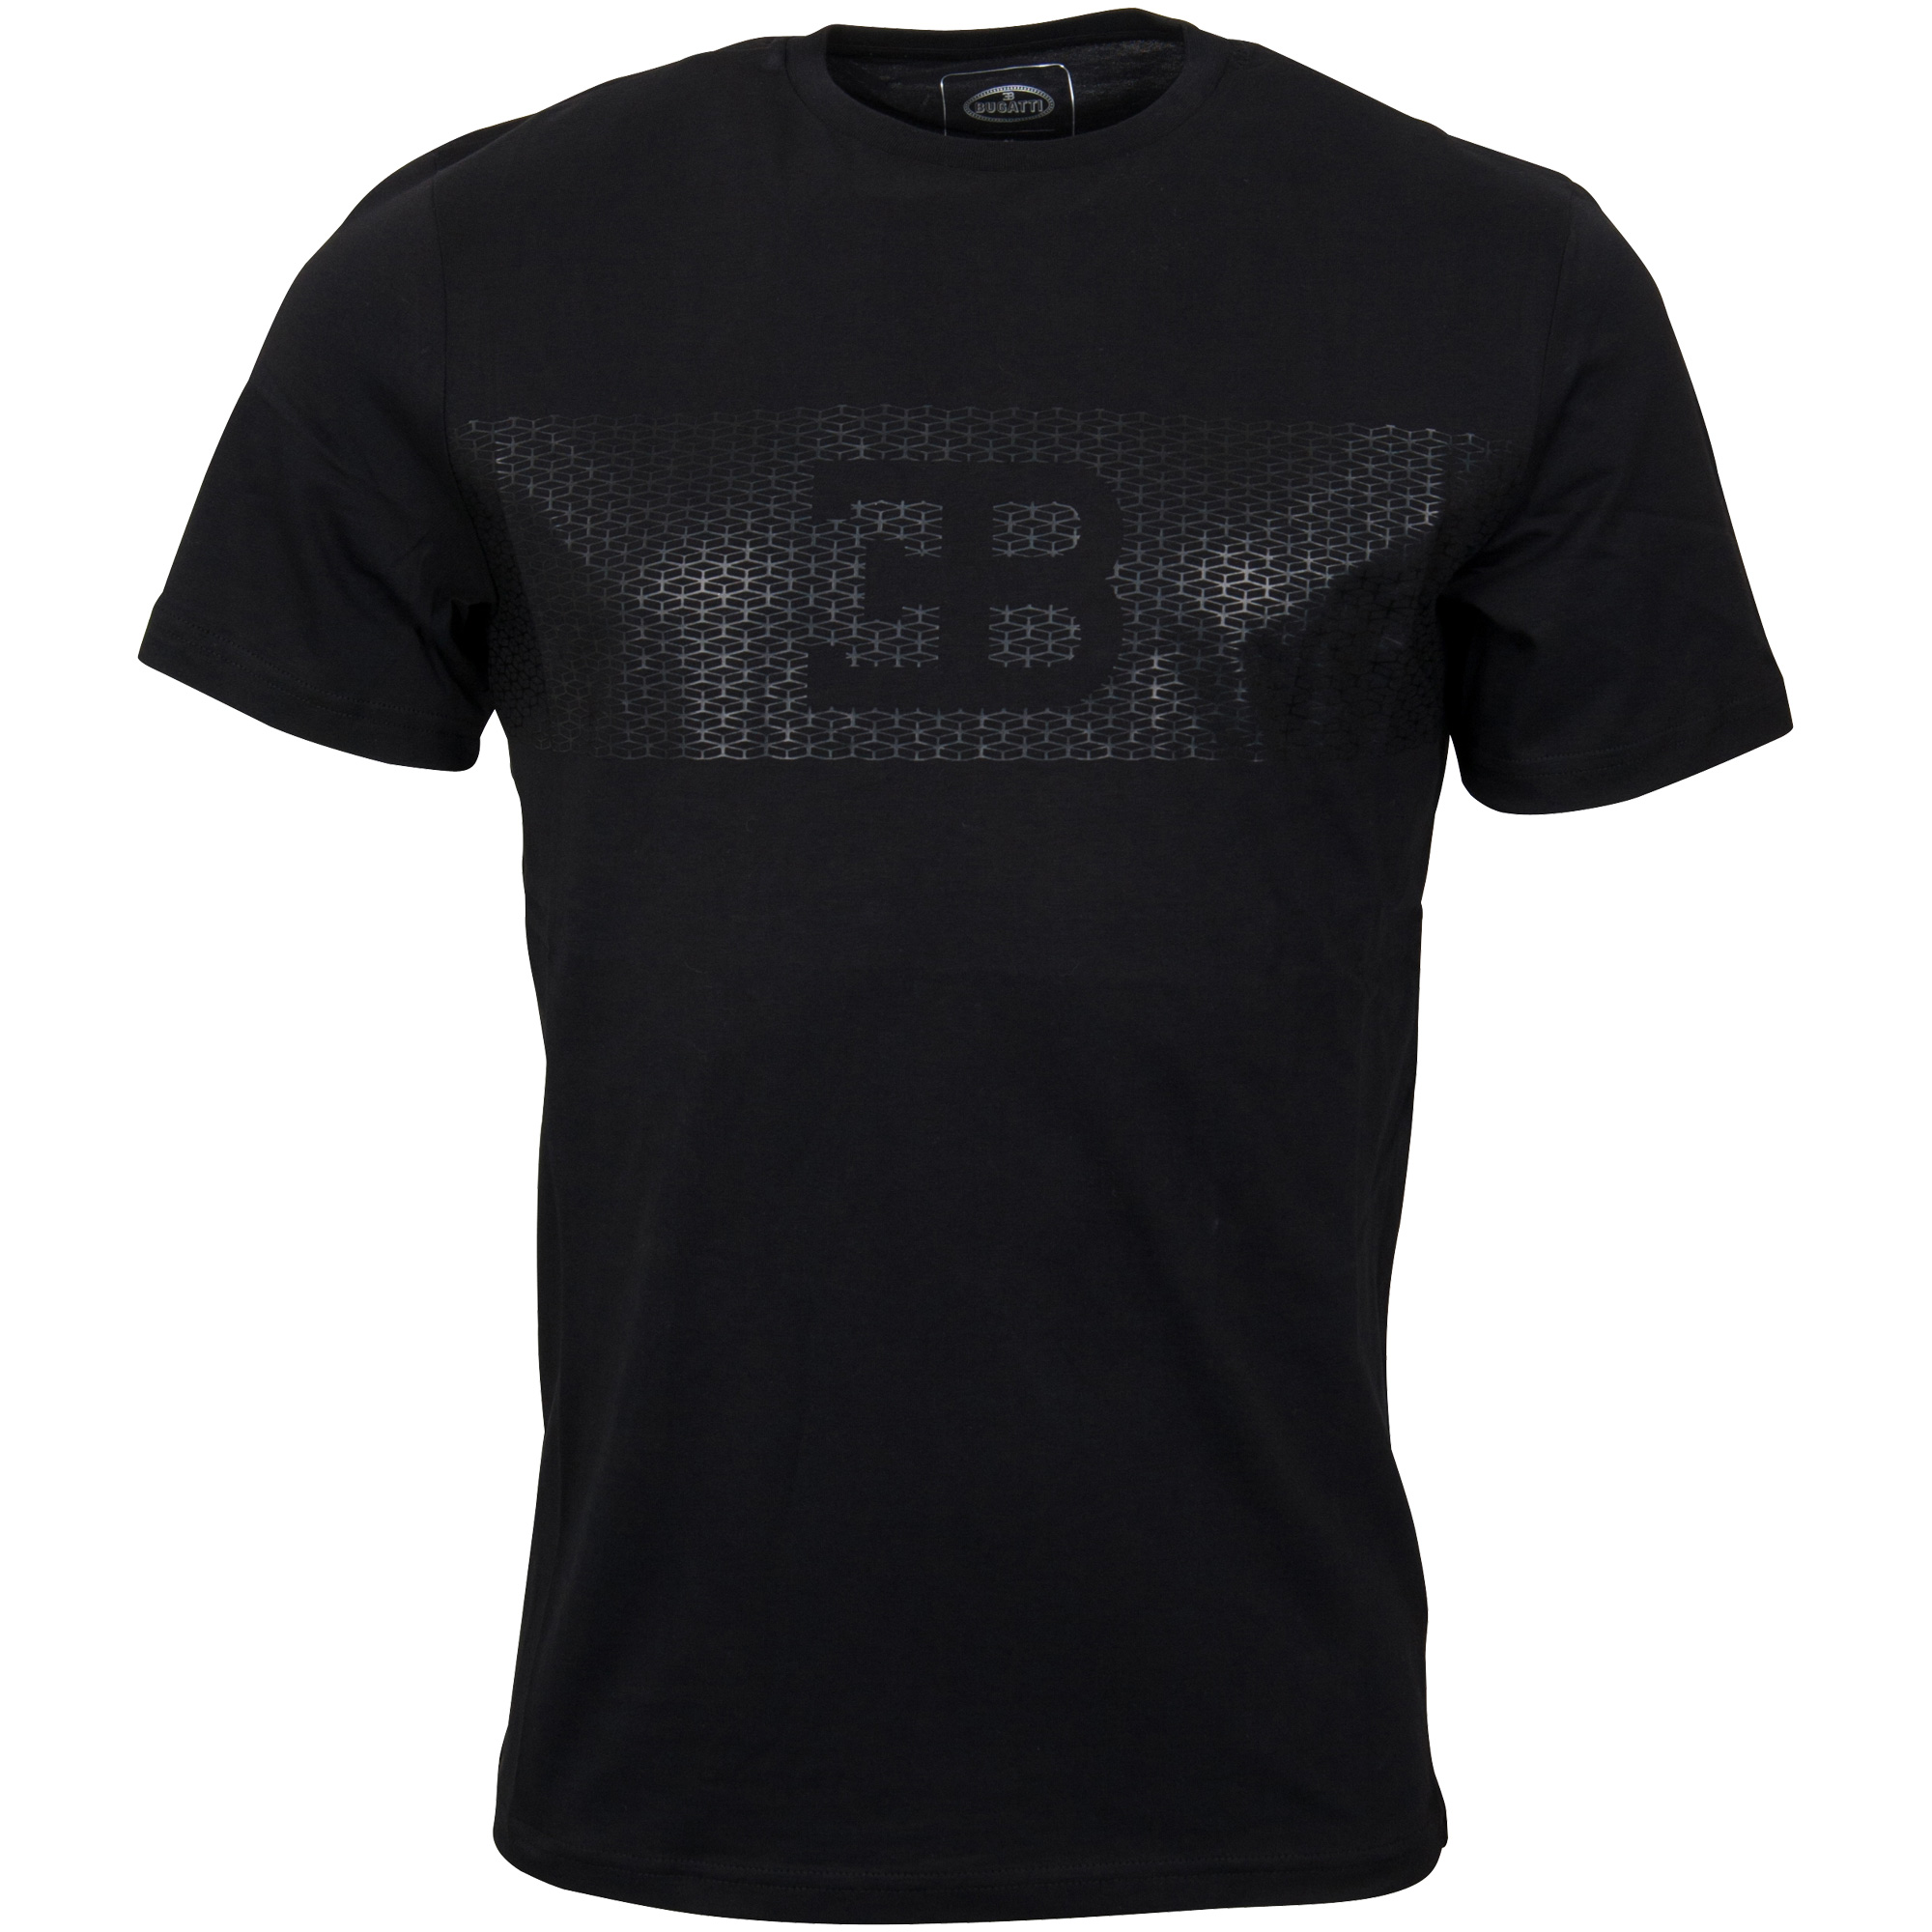 Bugatti T-Shirt "EB" - schwarz